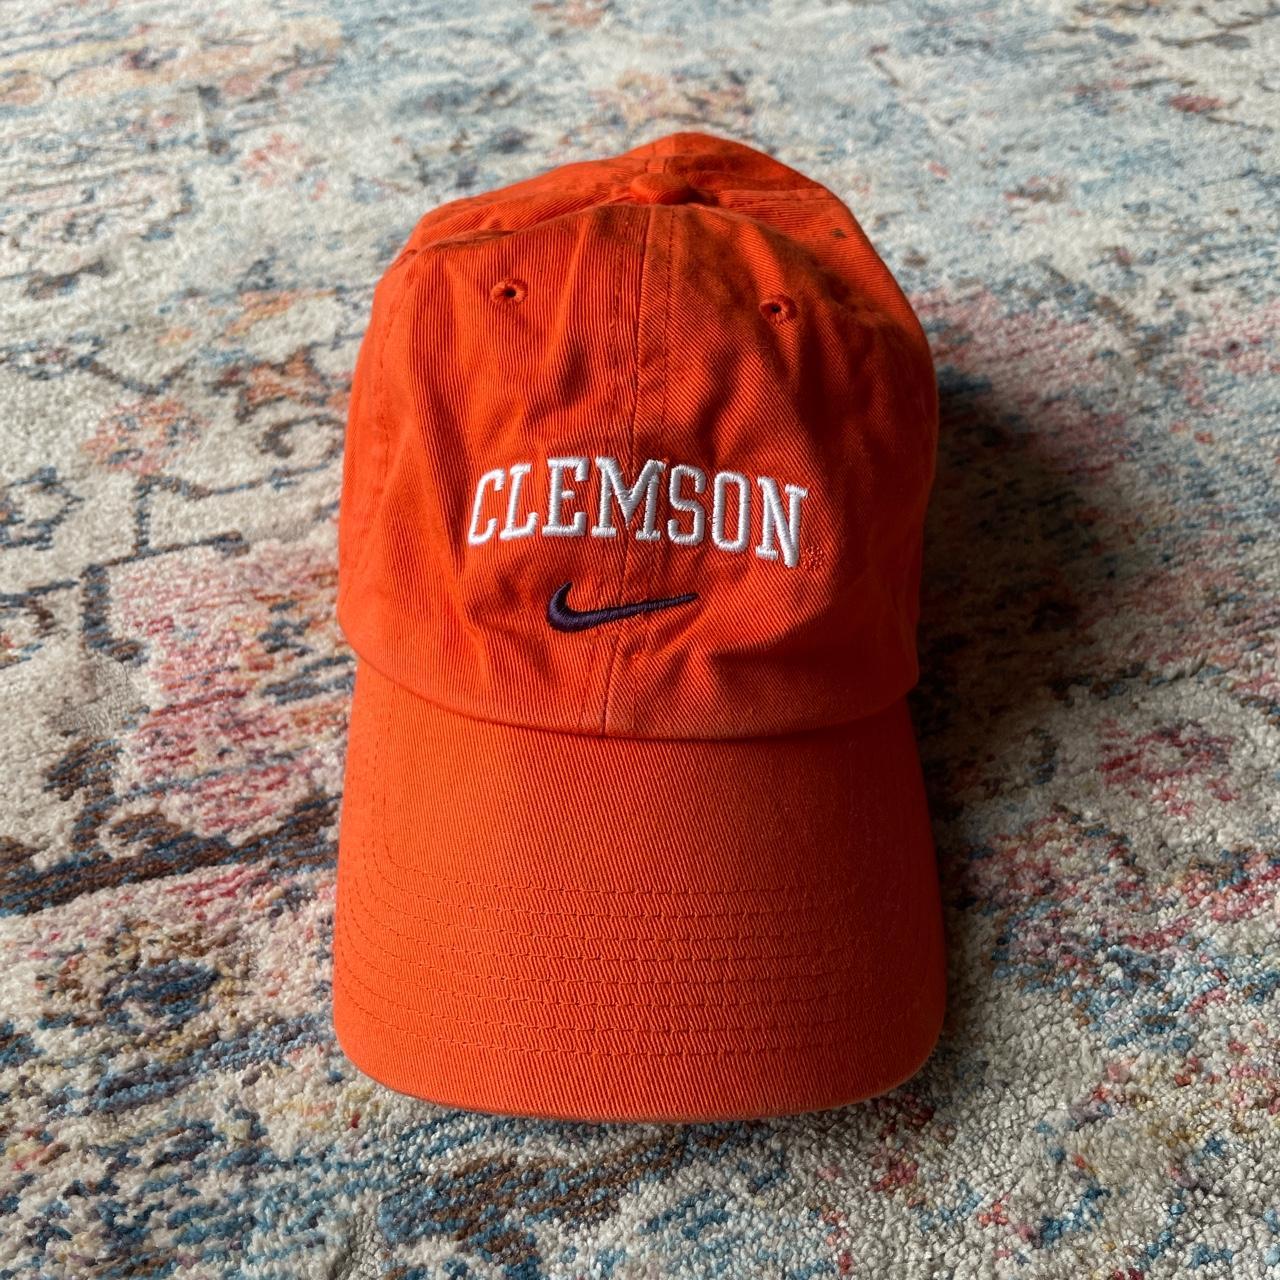 Vintage Nike Clemson Orange Cap